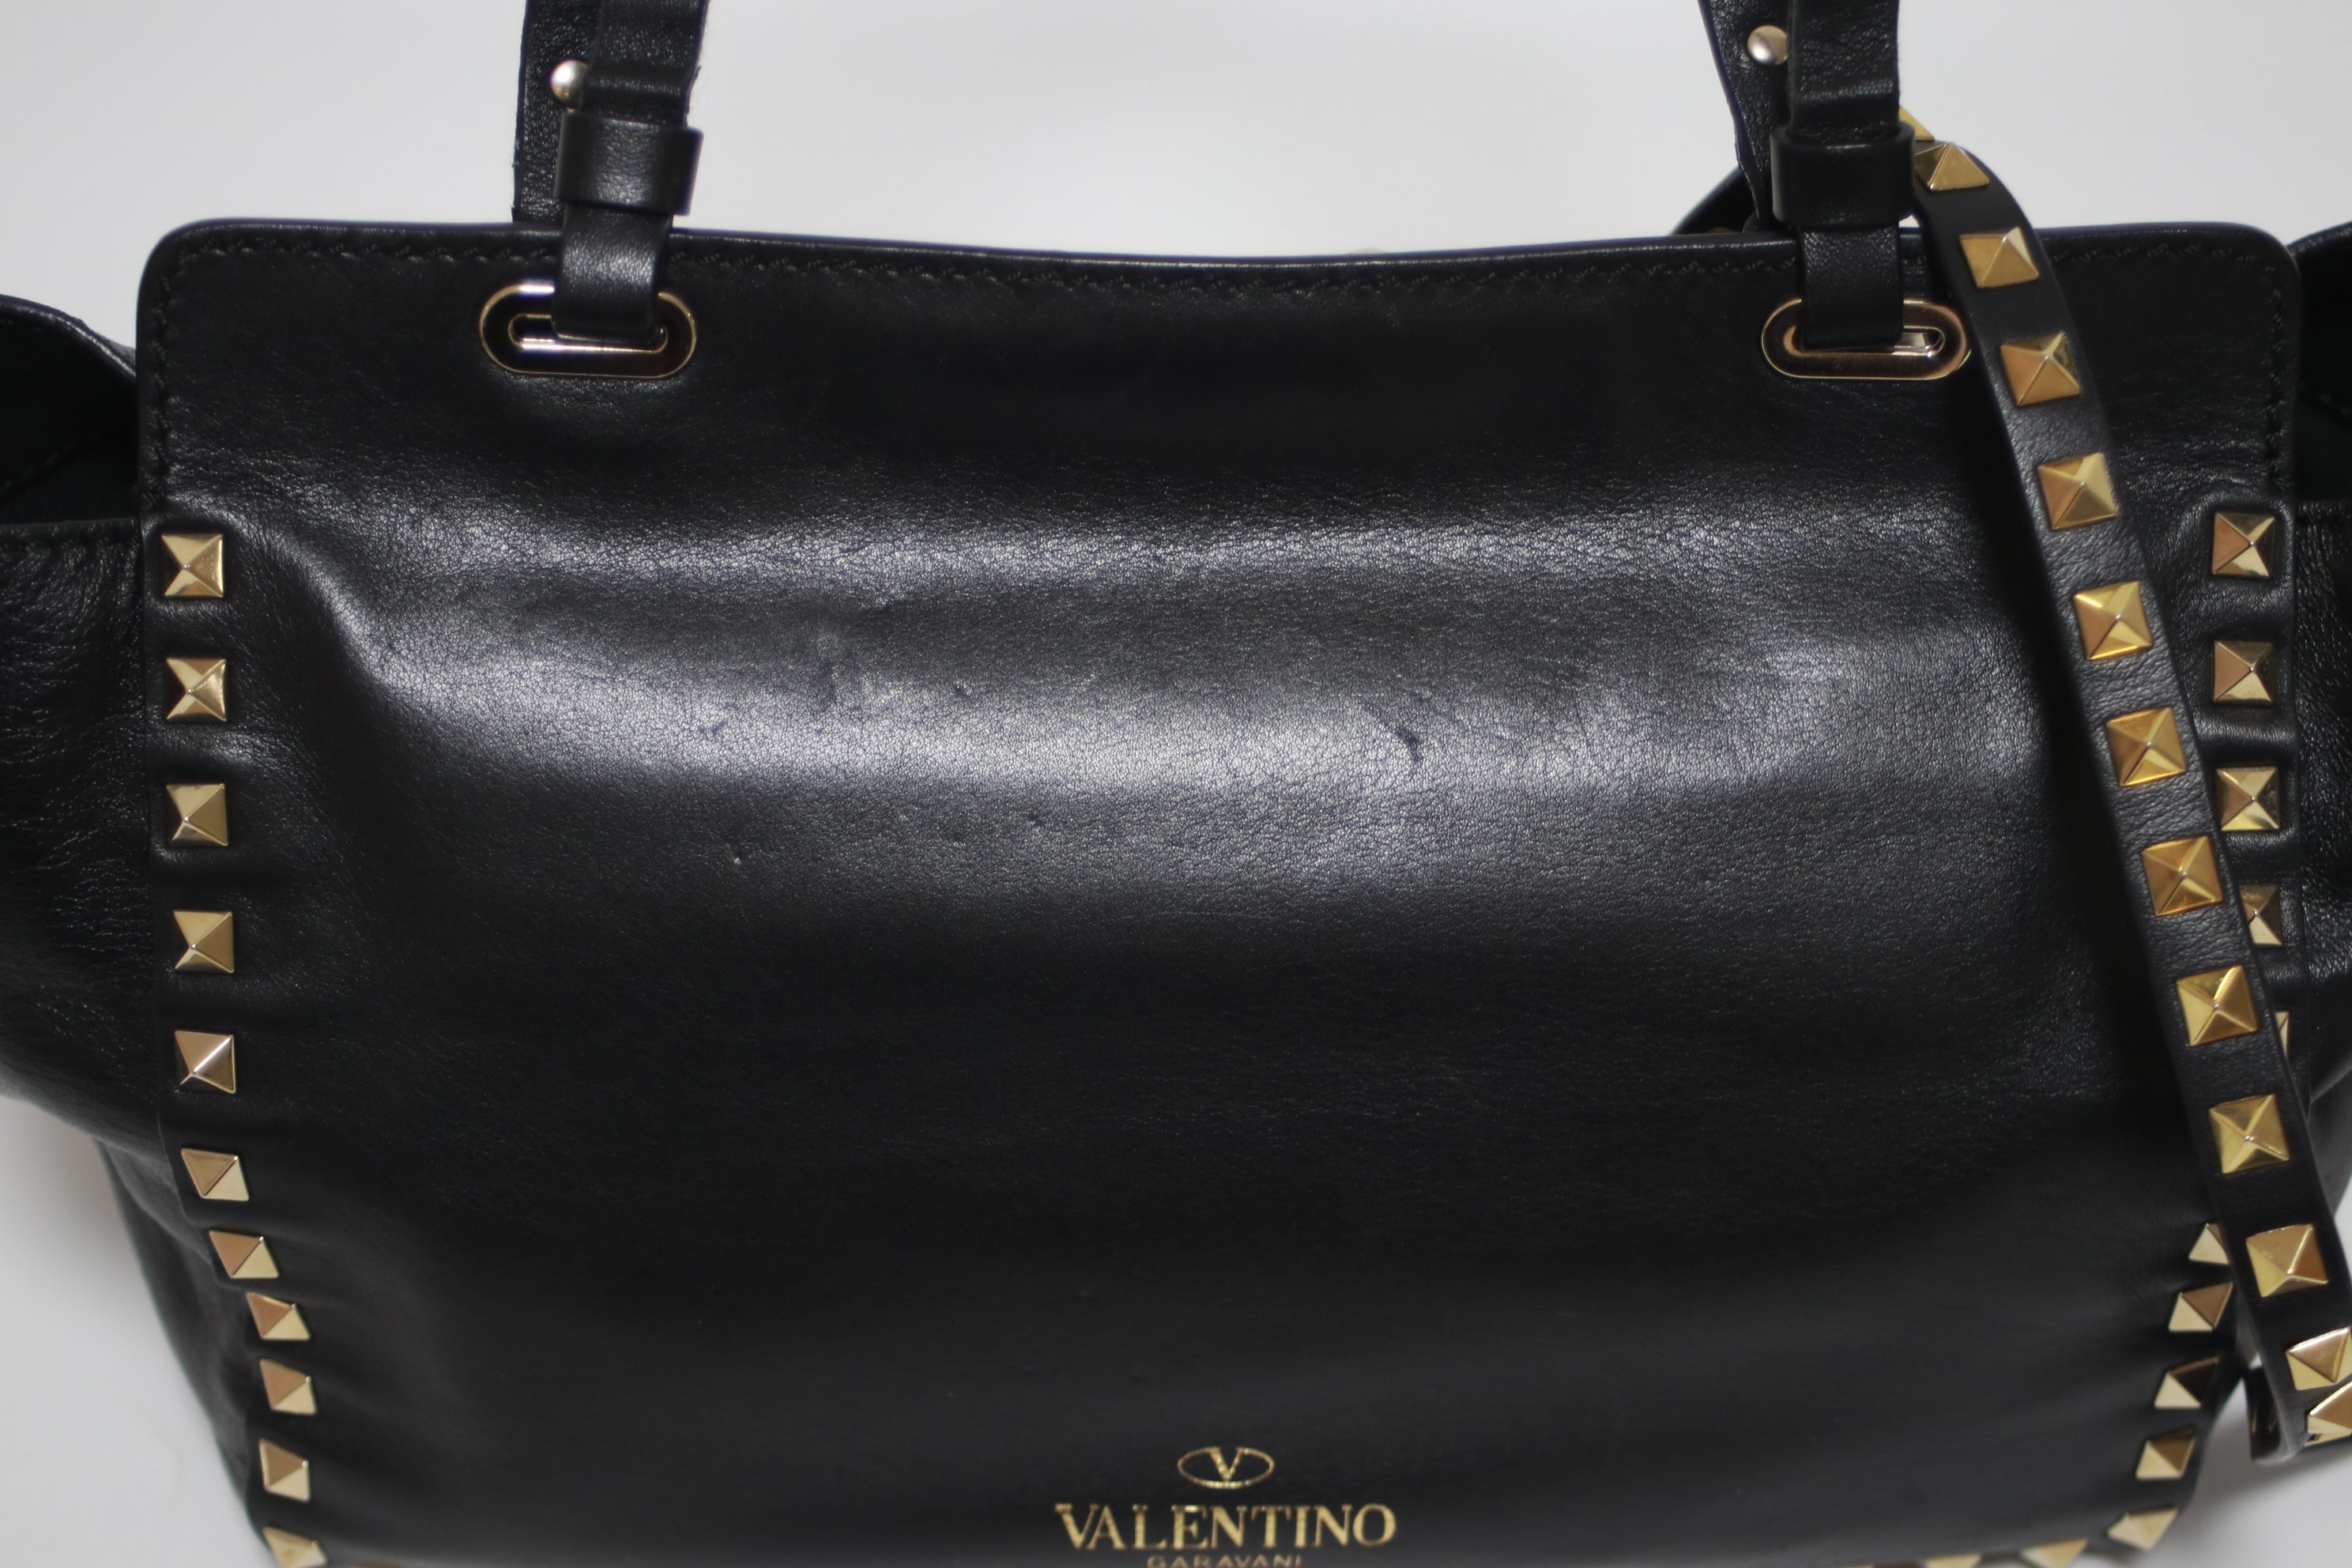 Louis Vuitton Cabas Mezzo Shoulder Tote Bag Used (7068)